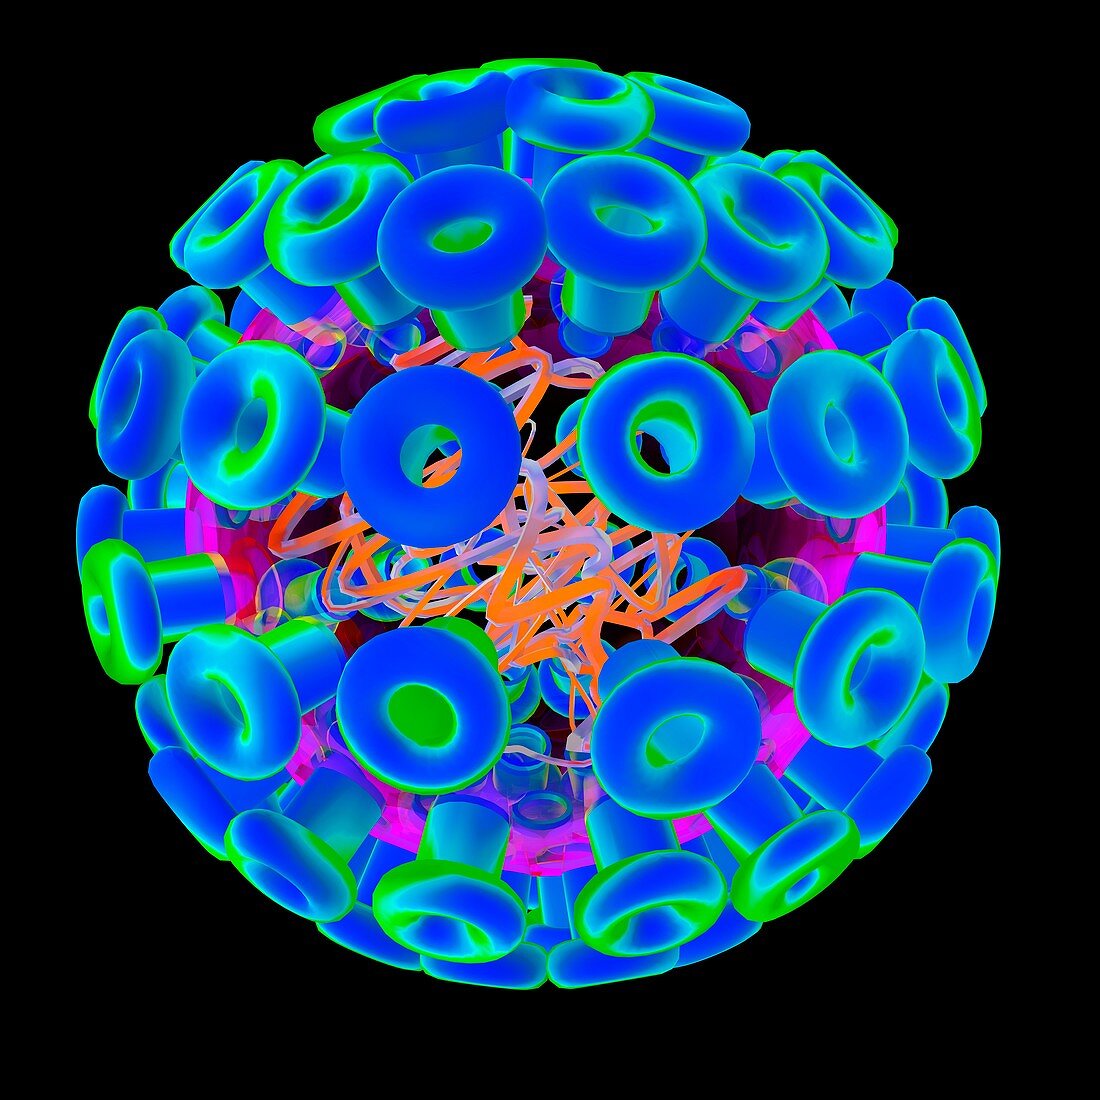 Herpes simplex type 1 virus,illustration